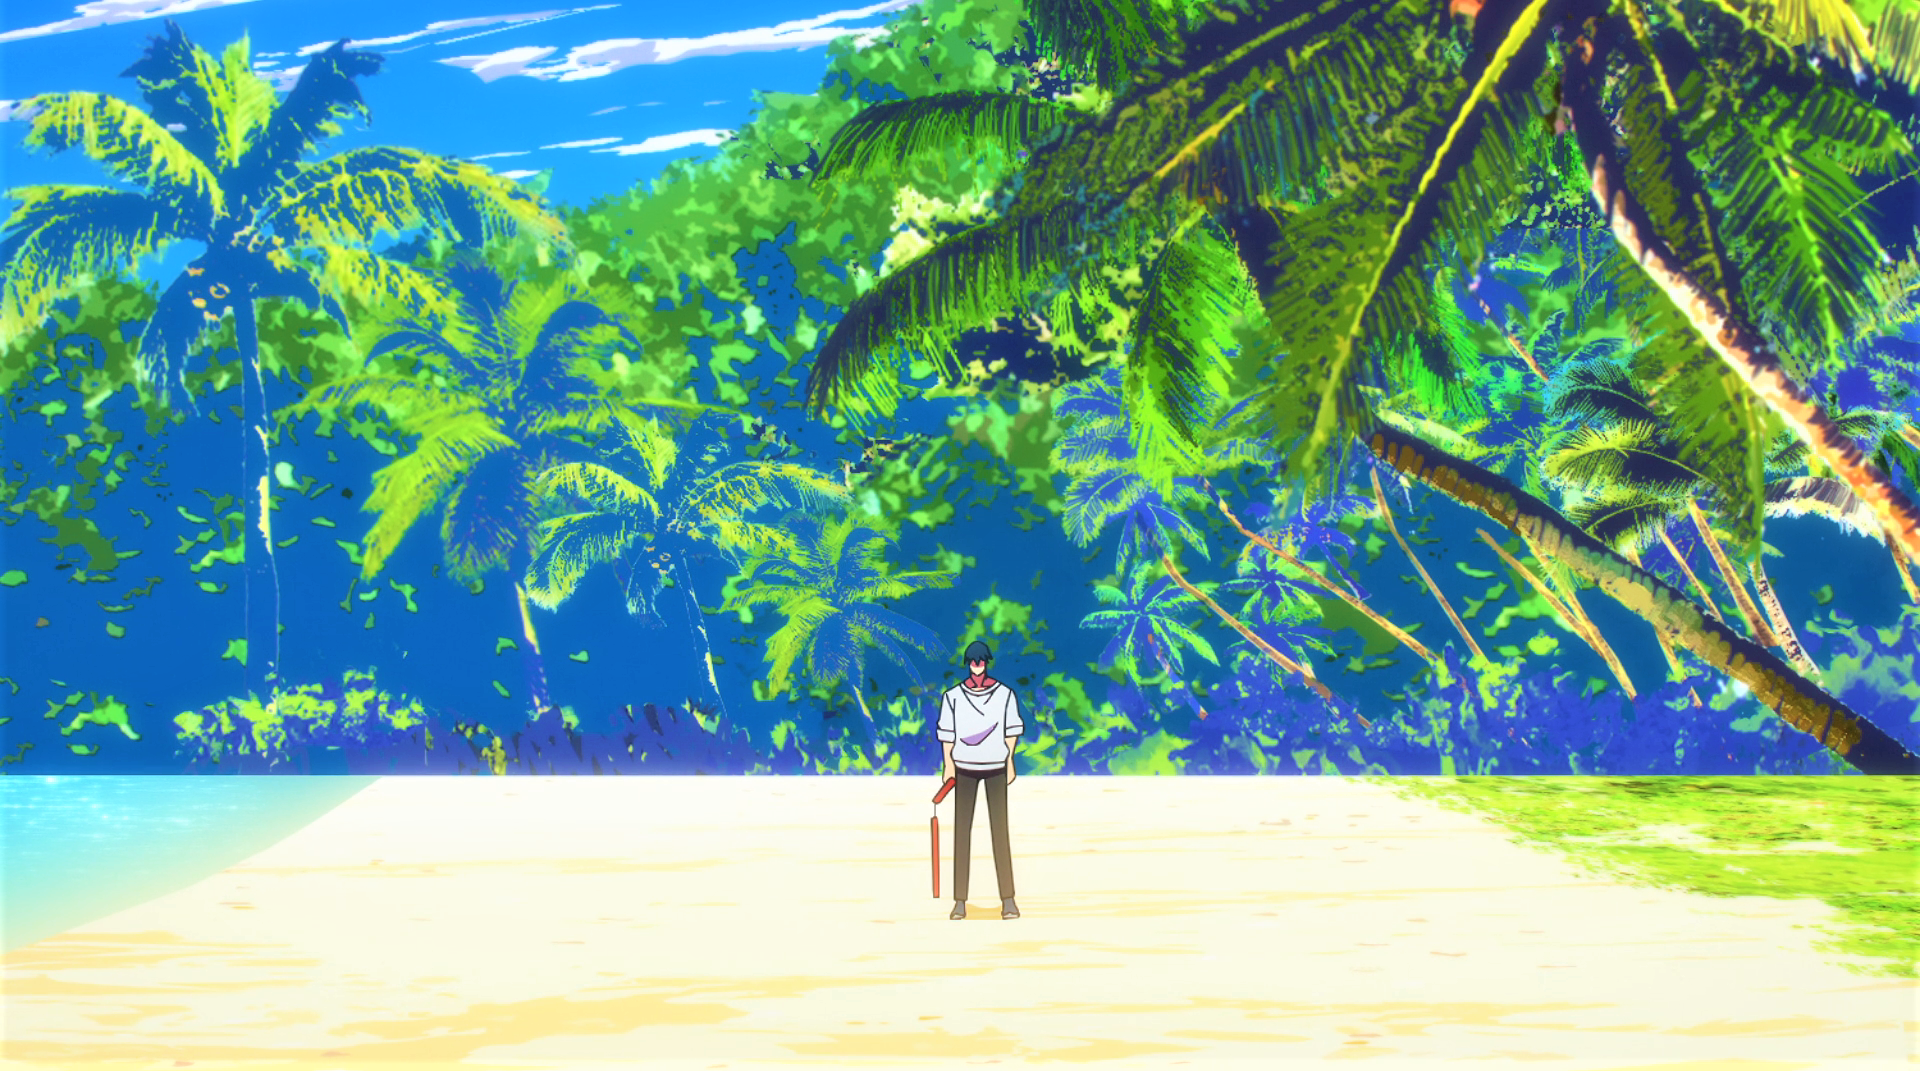 Anime 1920x1071 Jujutsu Kaisen Fushiguro Toji Nunchucks sweater palm trees trees beach sky anime anime screenshot anime boys clouds standing sand